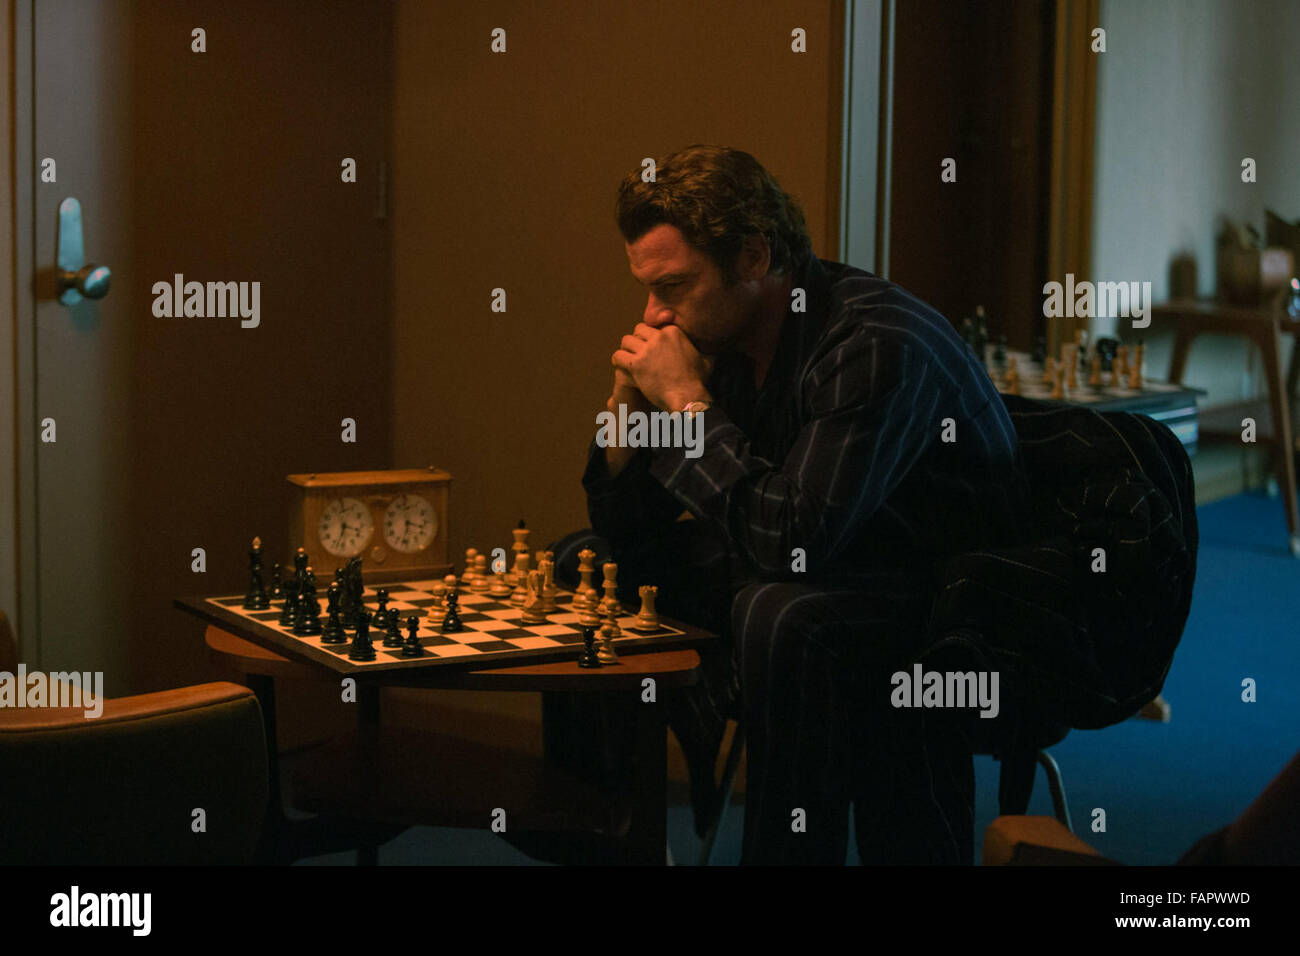 Bobby Fischer's war games create high drama in 'Pawn Sacrifice